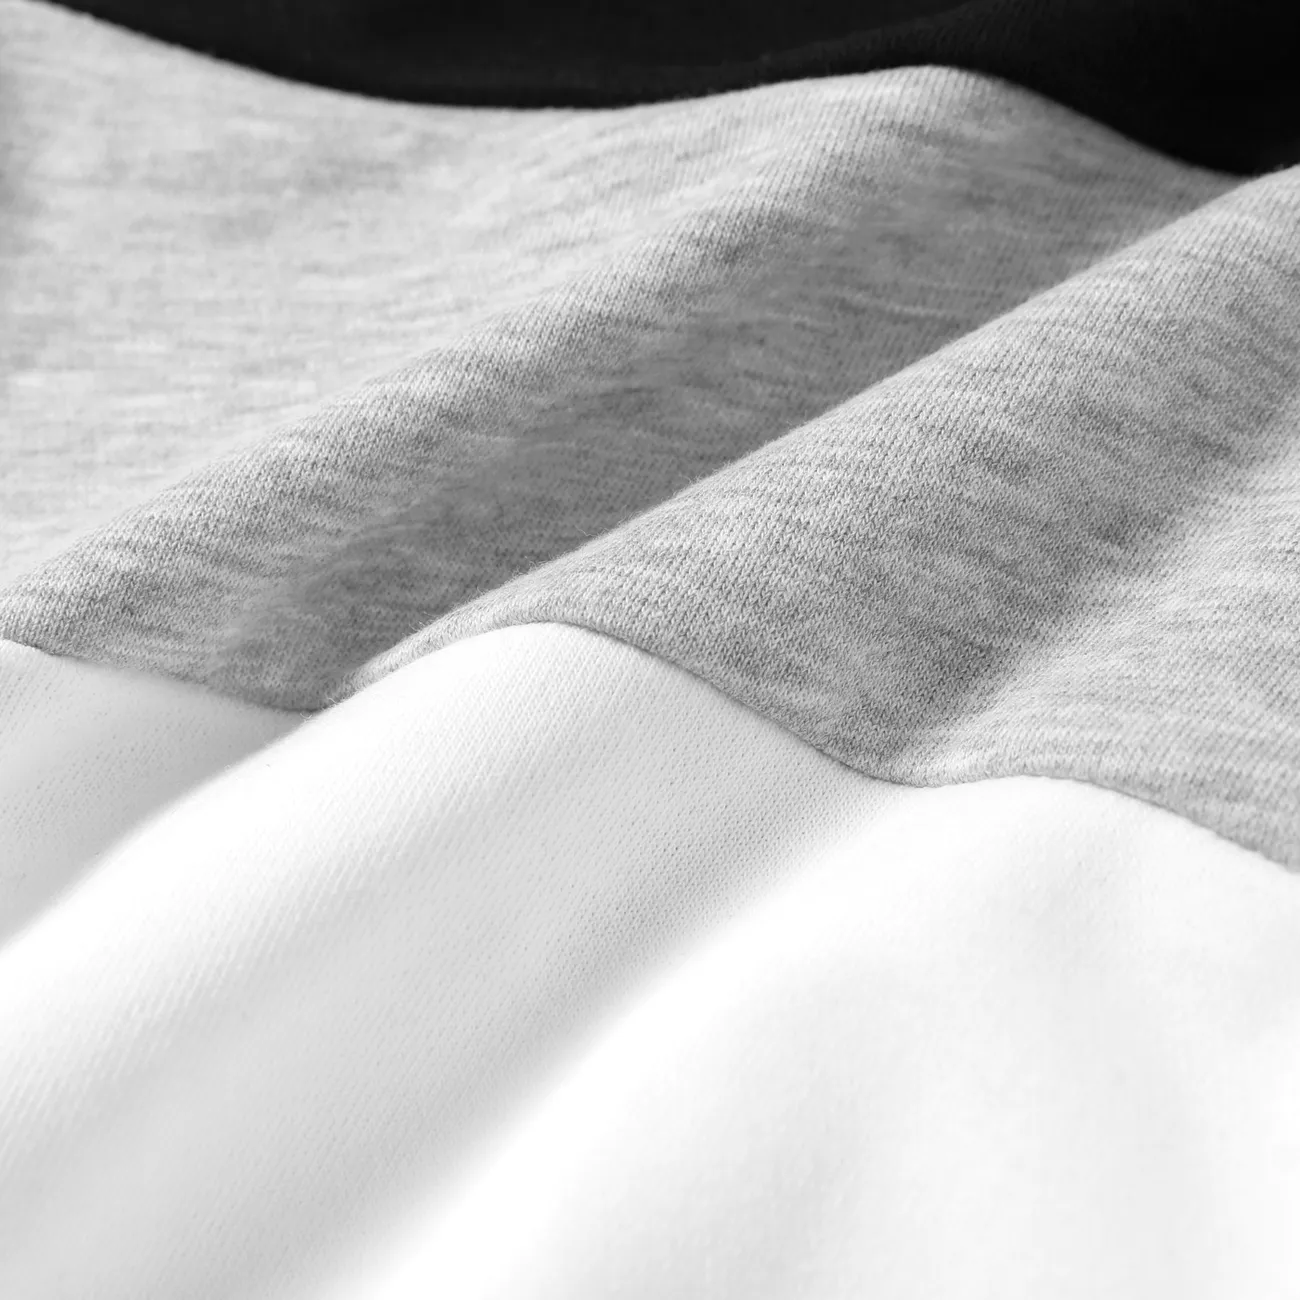 2pcs Baby Boy/Girl Star Print Long-sleeve Colorblock Sweatshirt and Solid Sweatpants Set Black big image 1